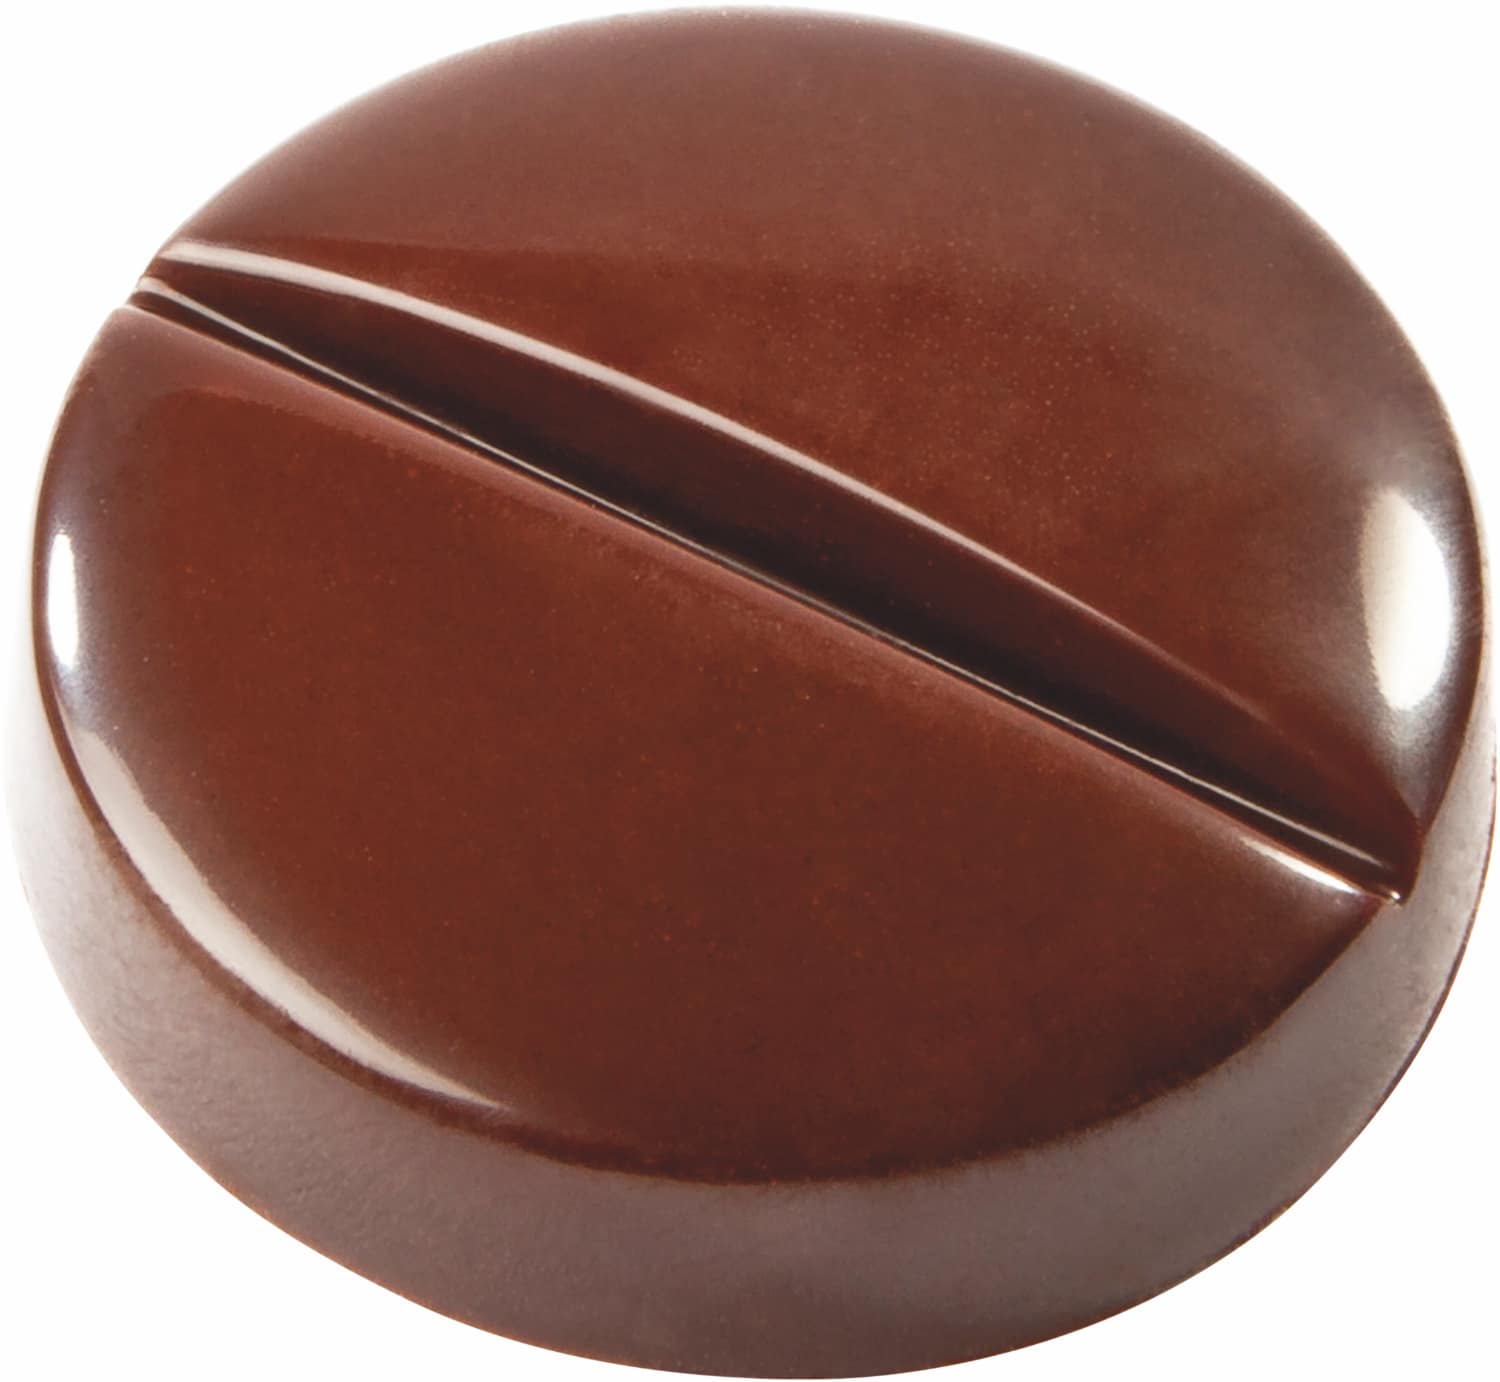 Schokoladenform "Keks" 421795